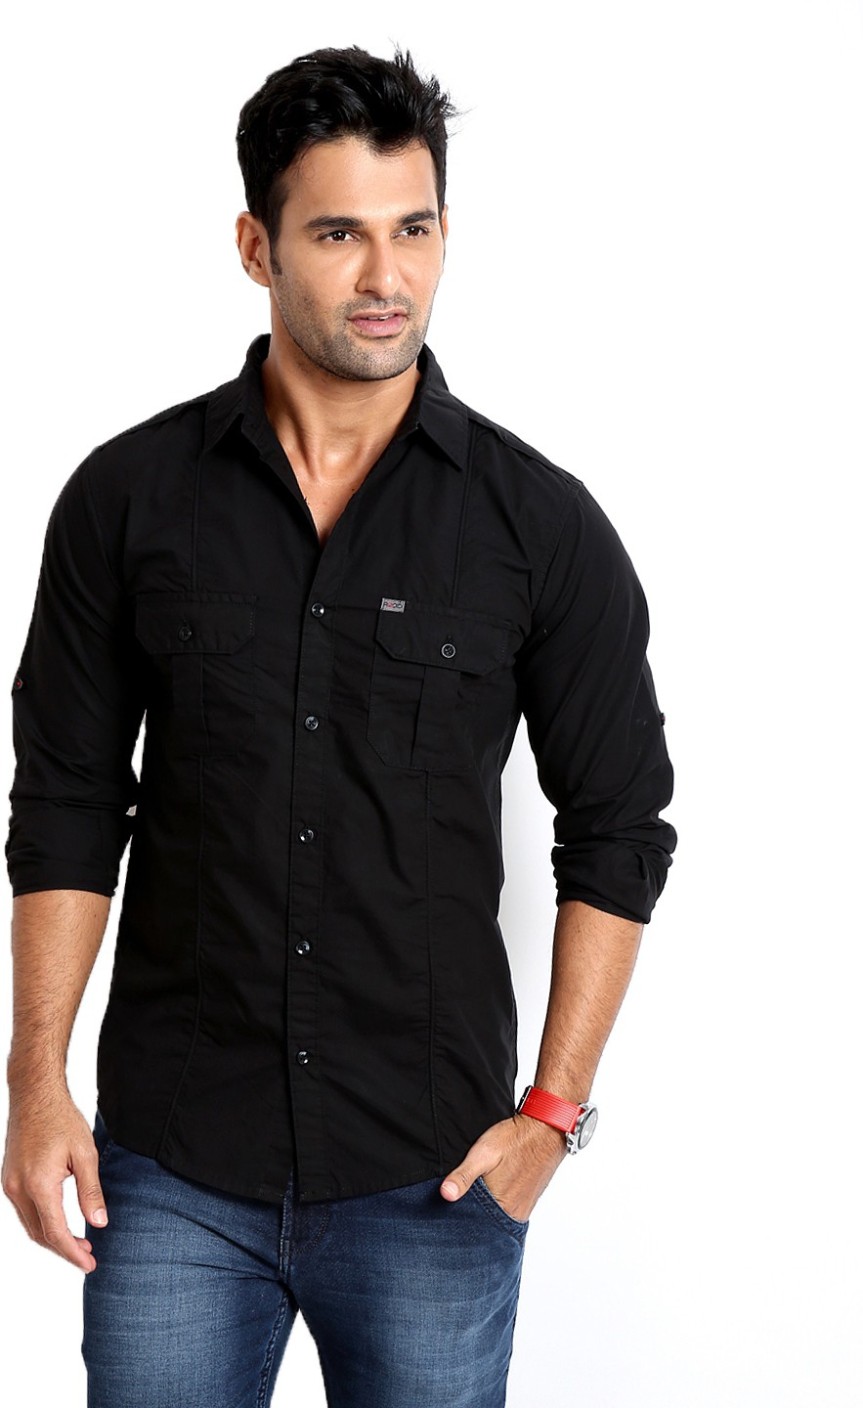 Rodid Men's Solid Casual Denim Black Shirt - Buy Jet Black Rodid Men's ...